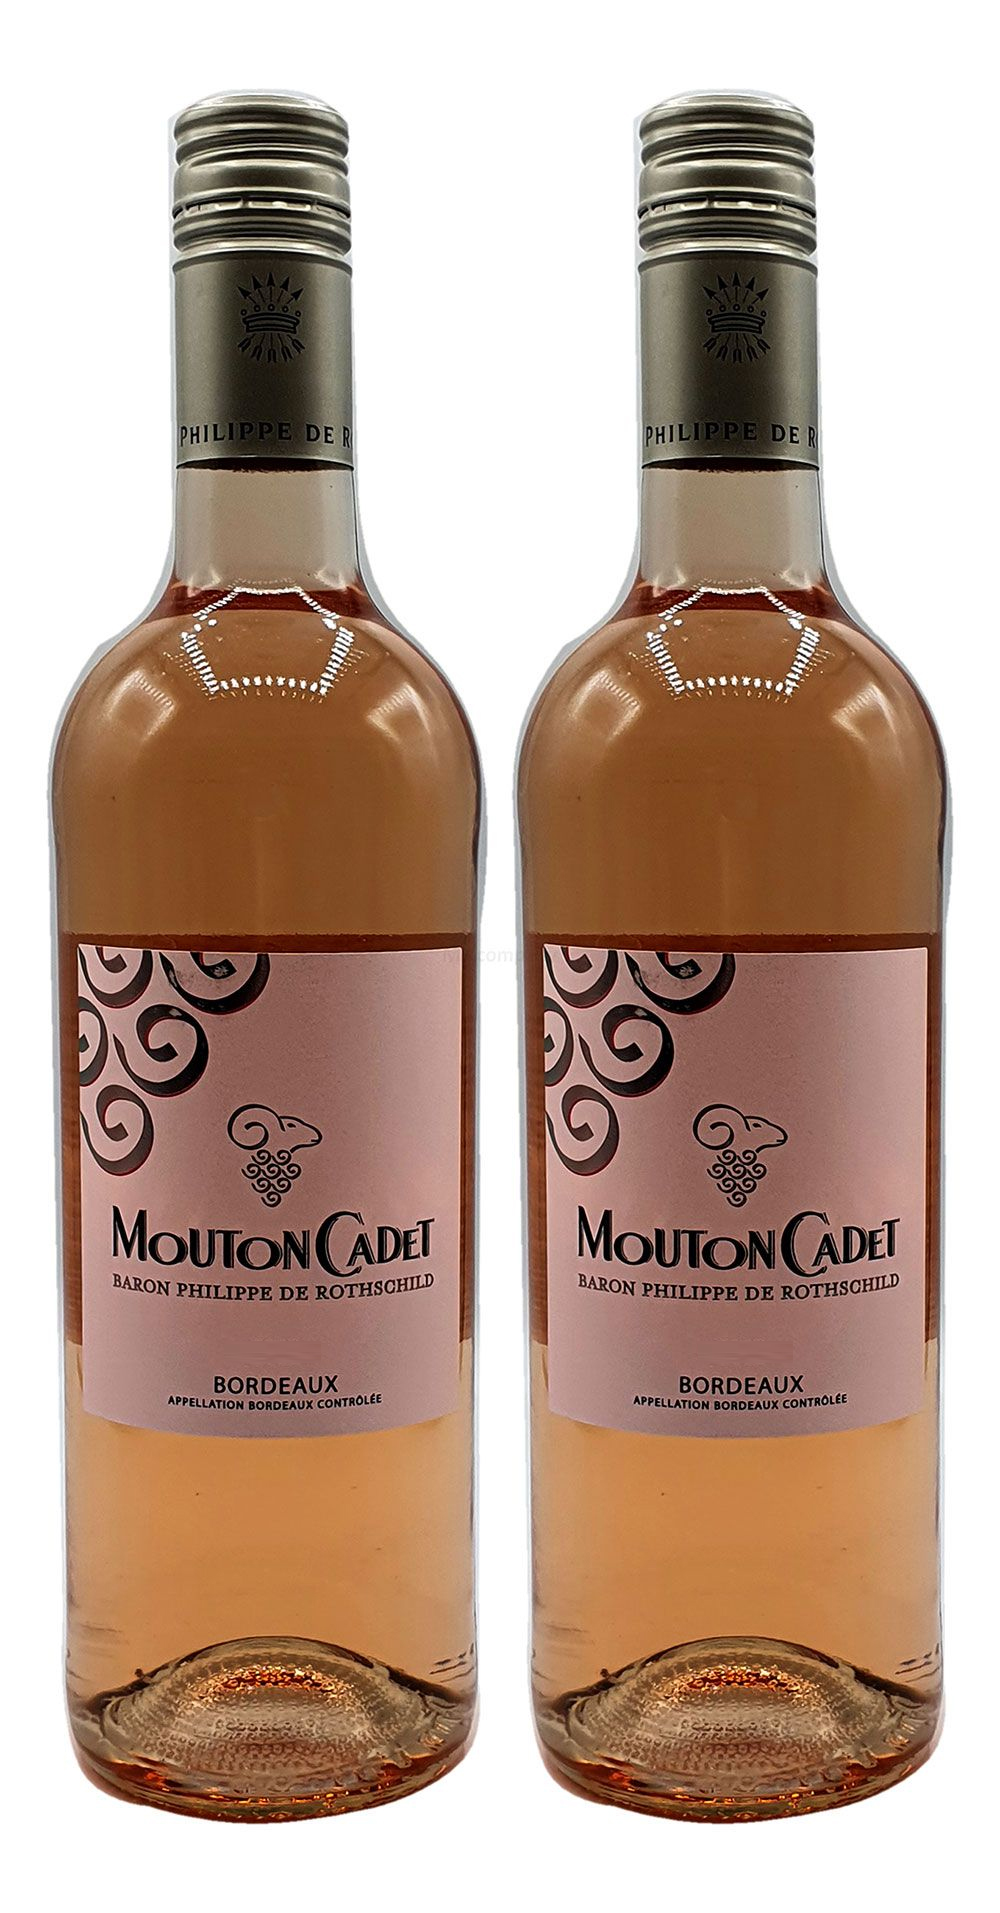 Rose Wein Set - 2x Mouton Cadet Bordeaux / Baron Philippe De Rothschild 750ml (12% Vol)- [Enthält Sulfite]